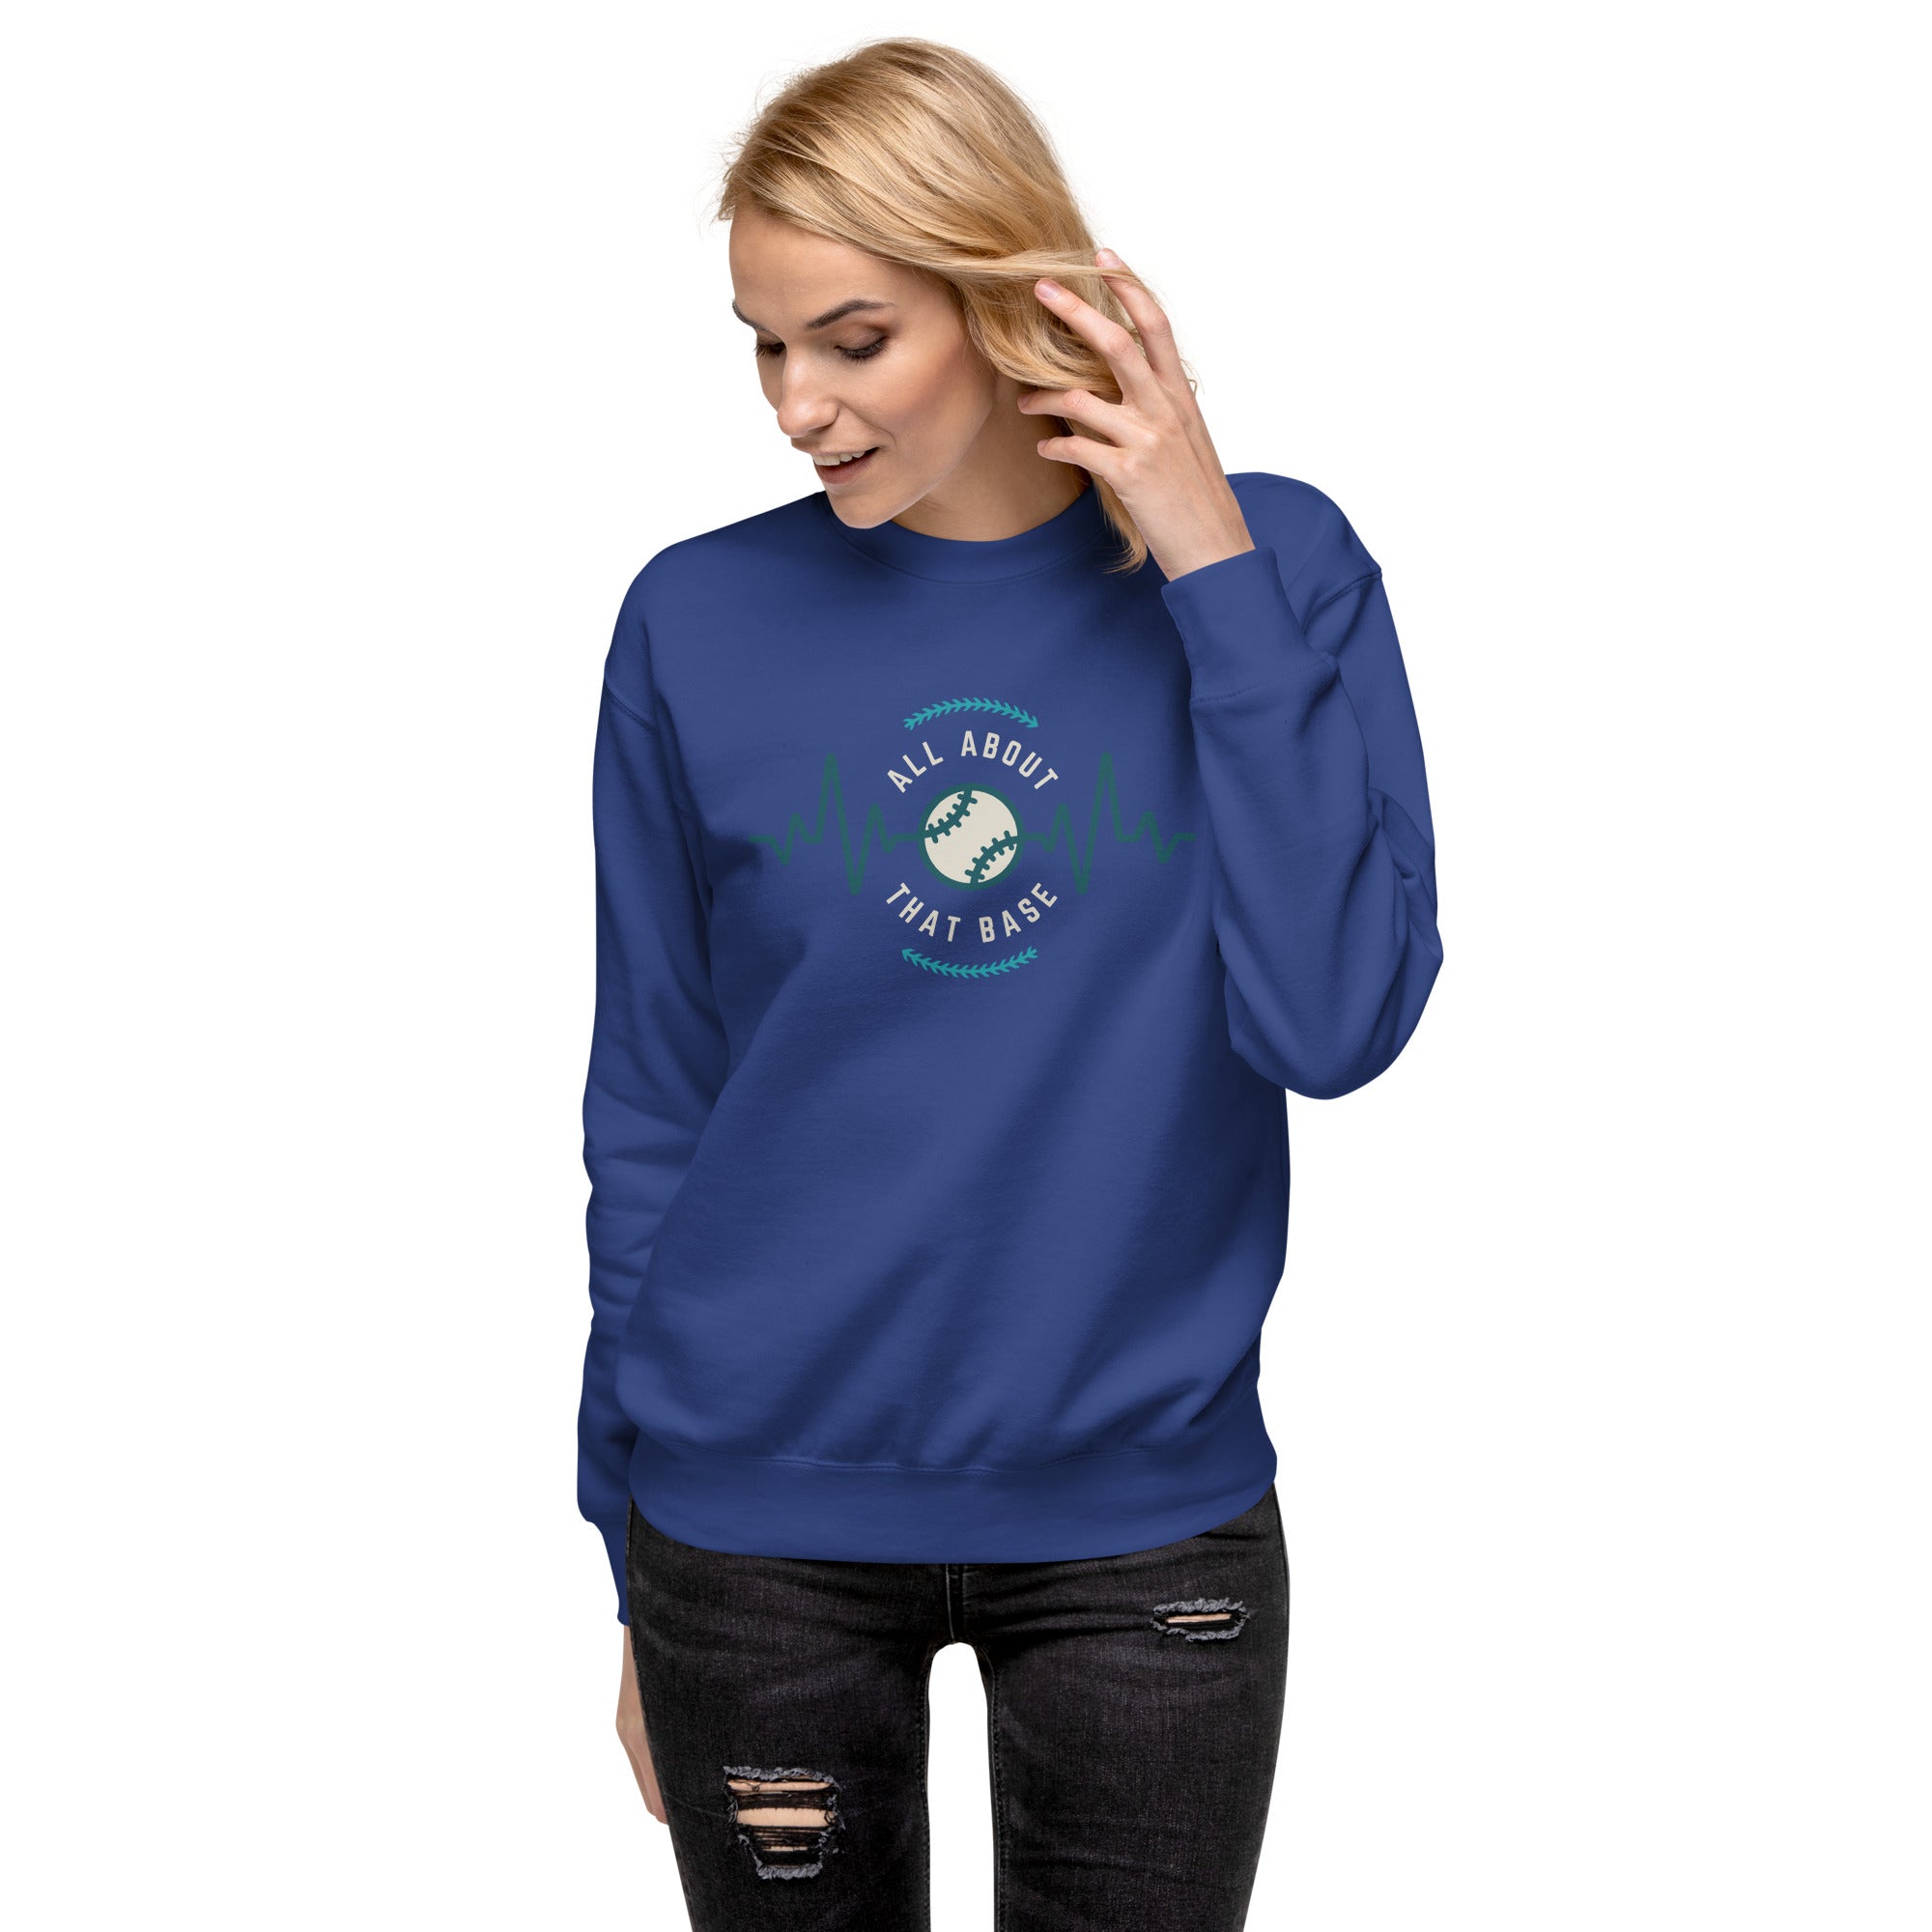 All About That Base Women's Premium Sweatshirt